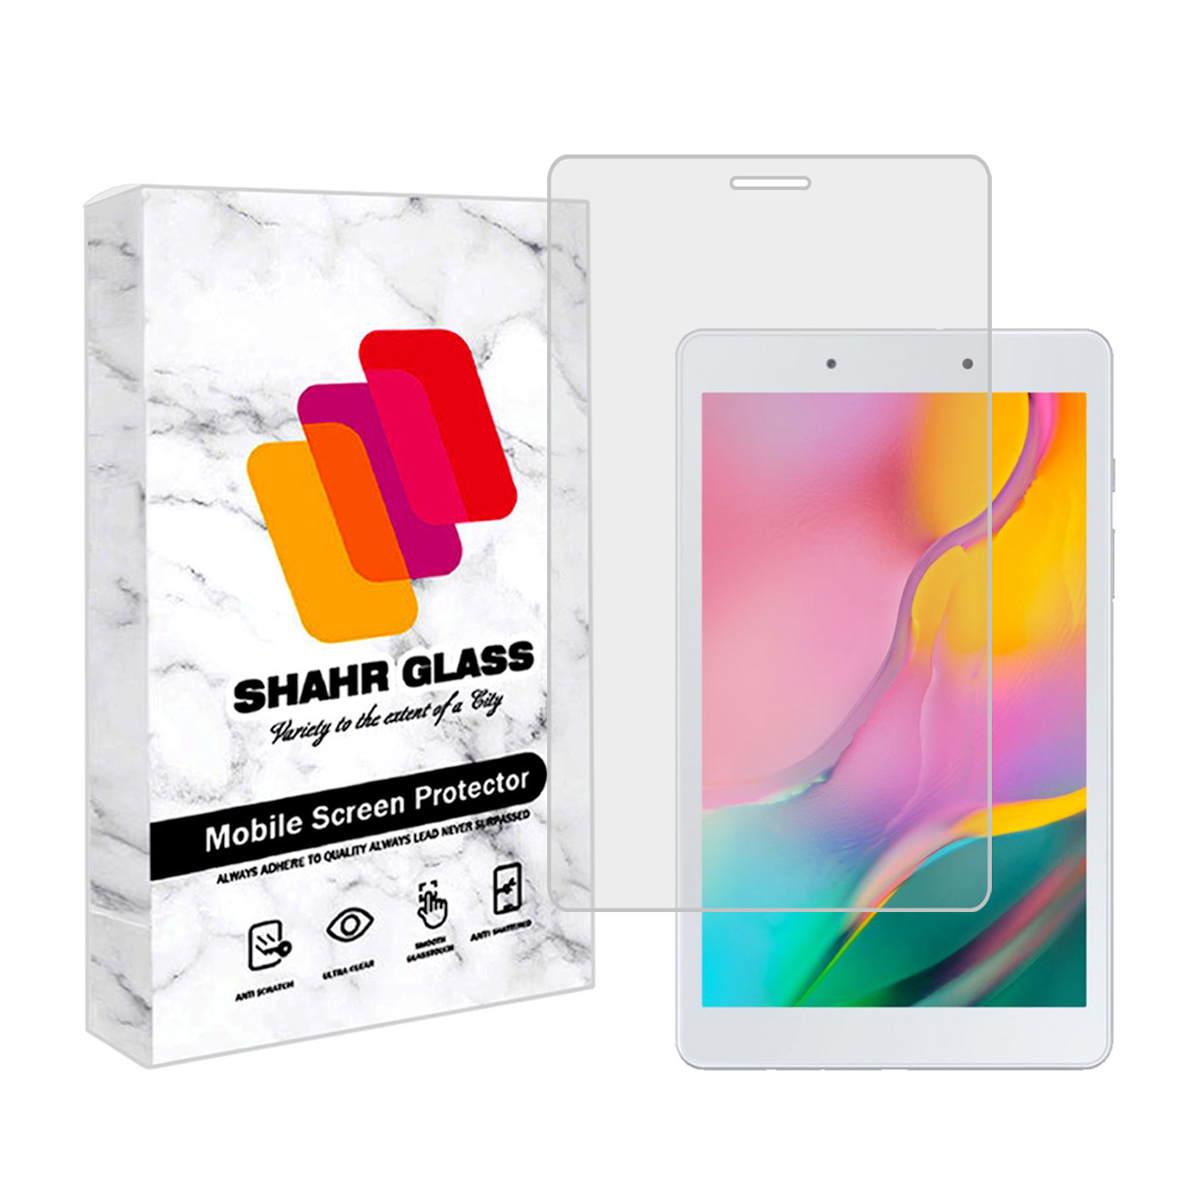 گلس تبلت سامسونگ Galaxy Tab A 8.0 2019 شهر گلس مدل TS1SHA -بی رنگ شفاف